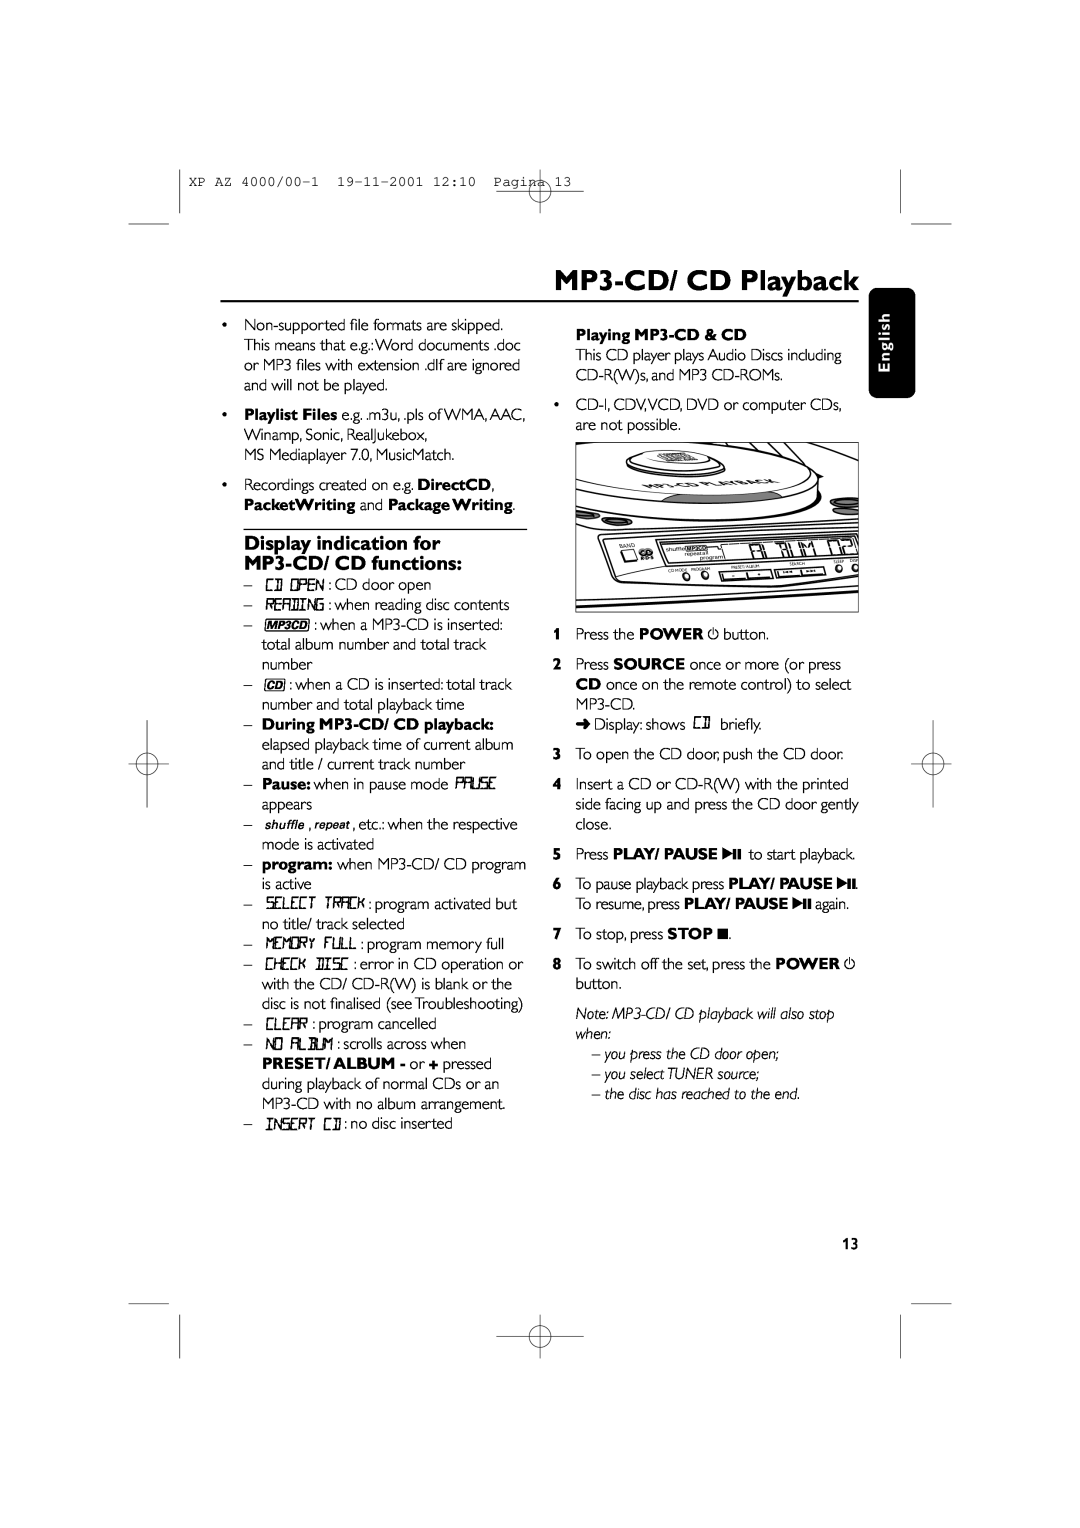 Philips AZ4000 manual Display indication for MP3-CD/ CD functions, Playing MP3-CD & CD, CD-RWs, and MP3 CD-ROMs 